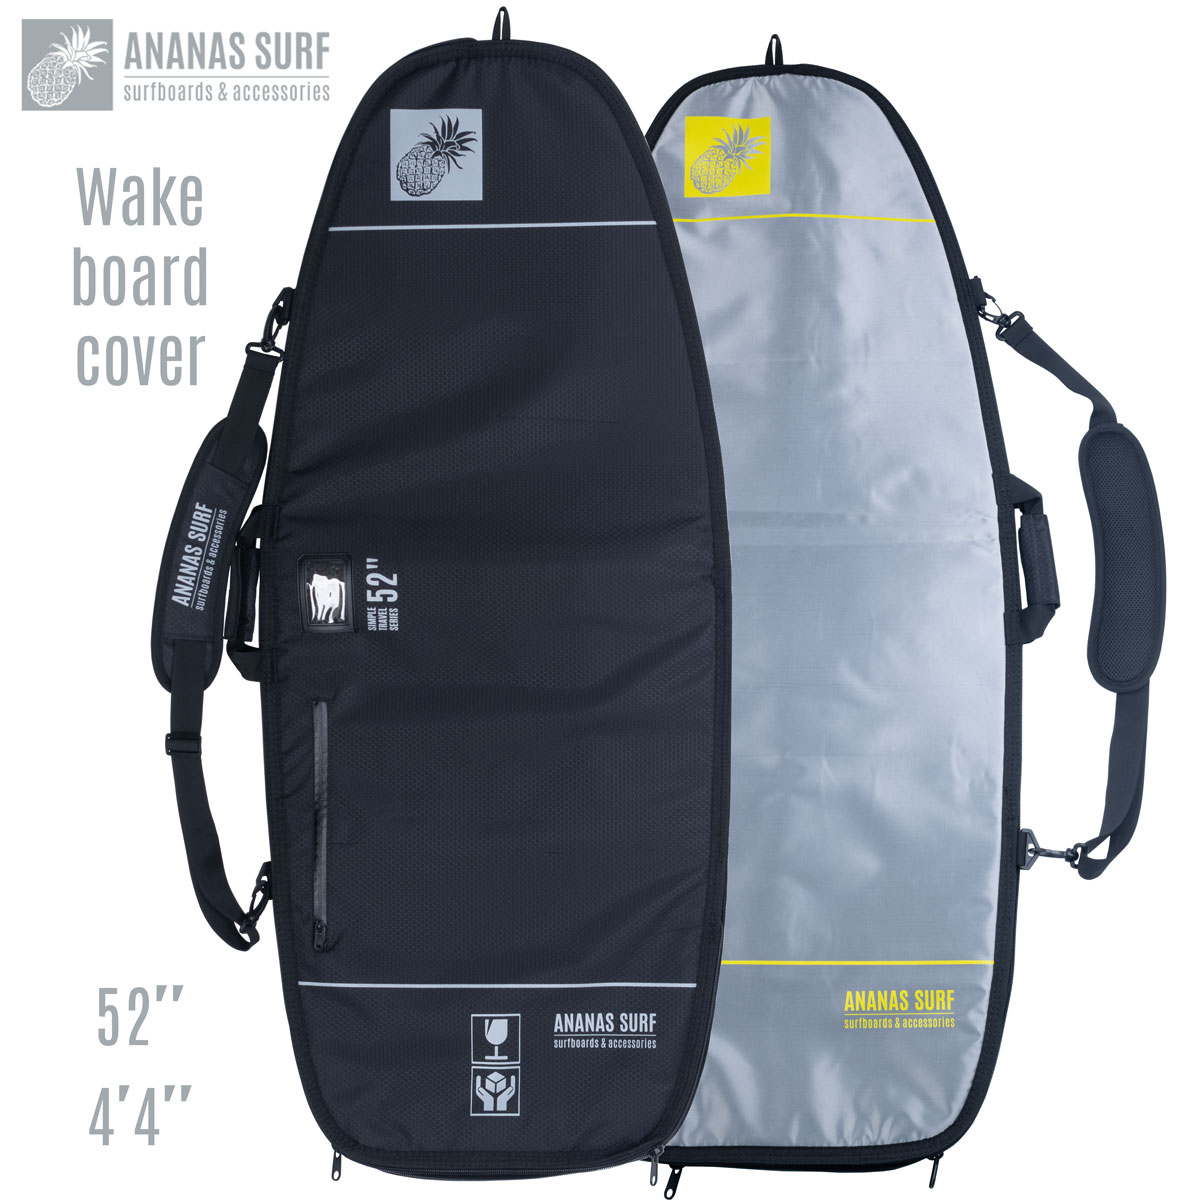 Ananas Surf 52 &(4&4&) 132 cm Wakesurf Kite Hydrofoil Board Blunt Nose Cover Bag Protect Boardbag